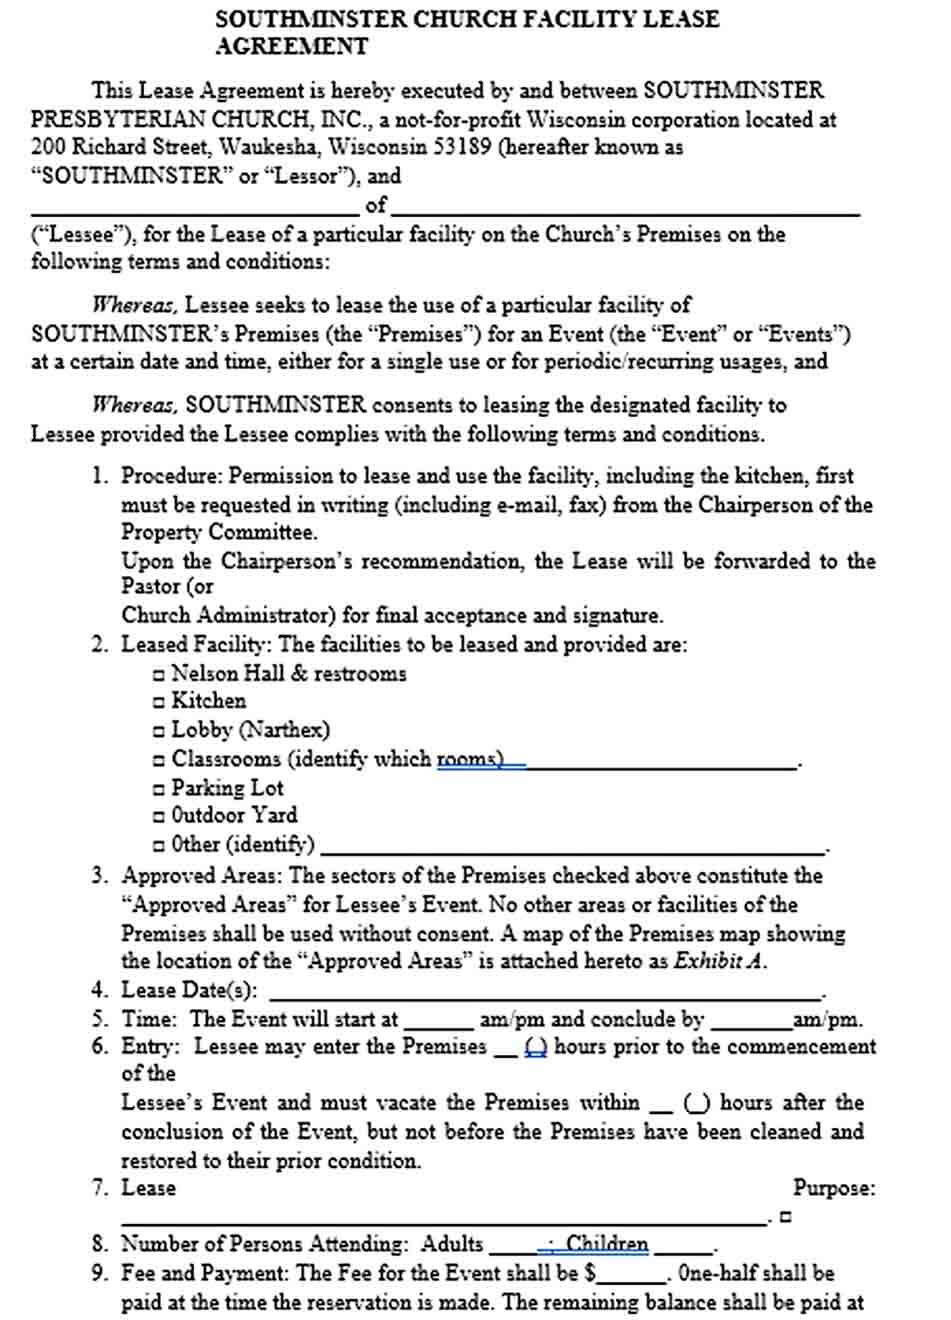 Sample Church Lease Agreement Template